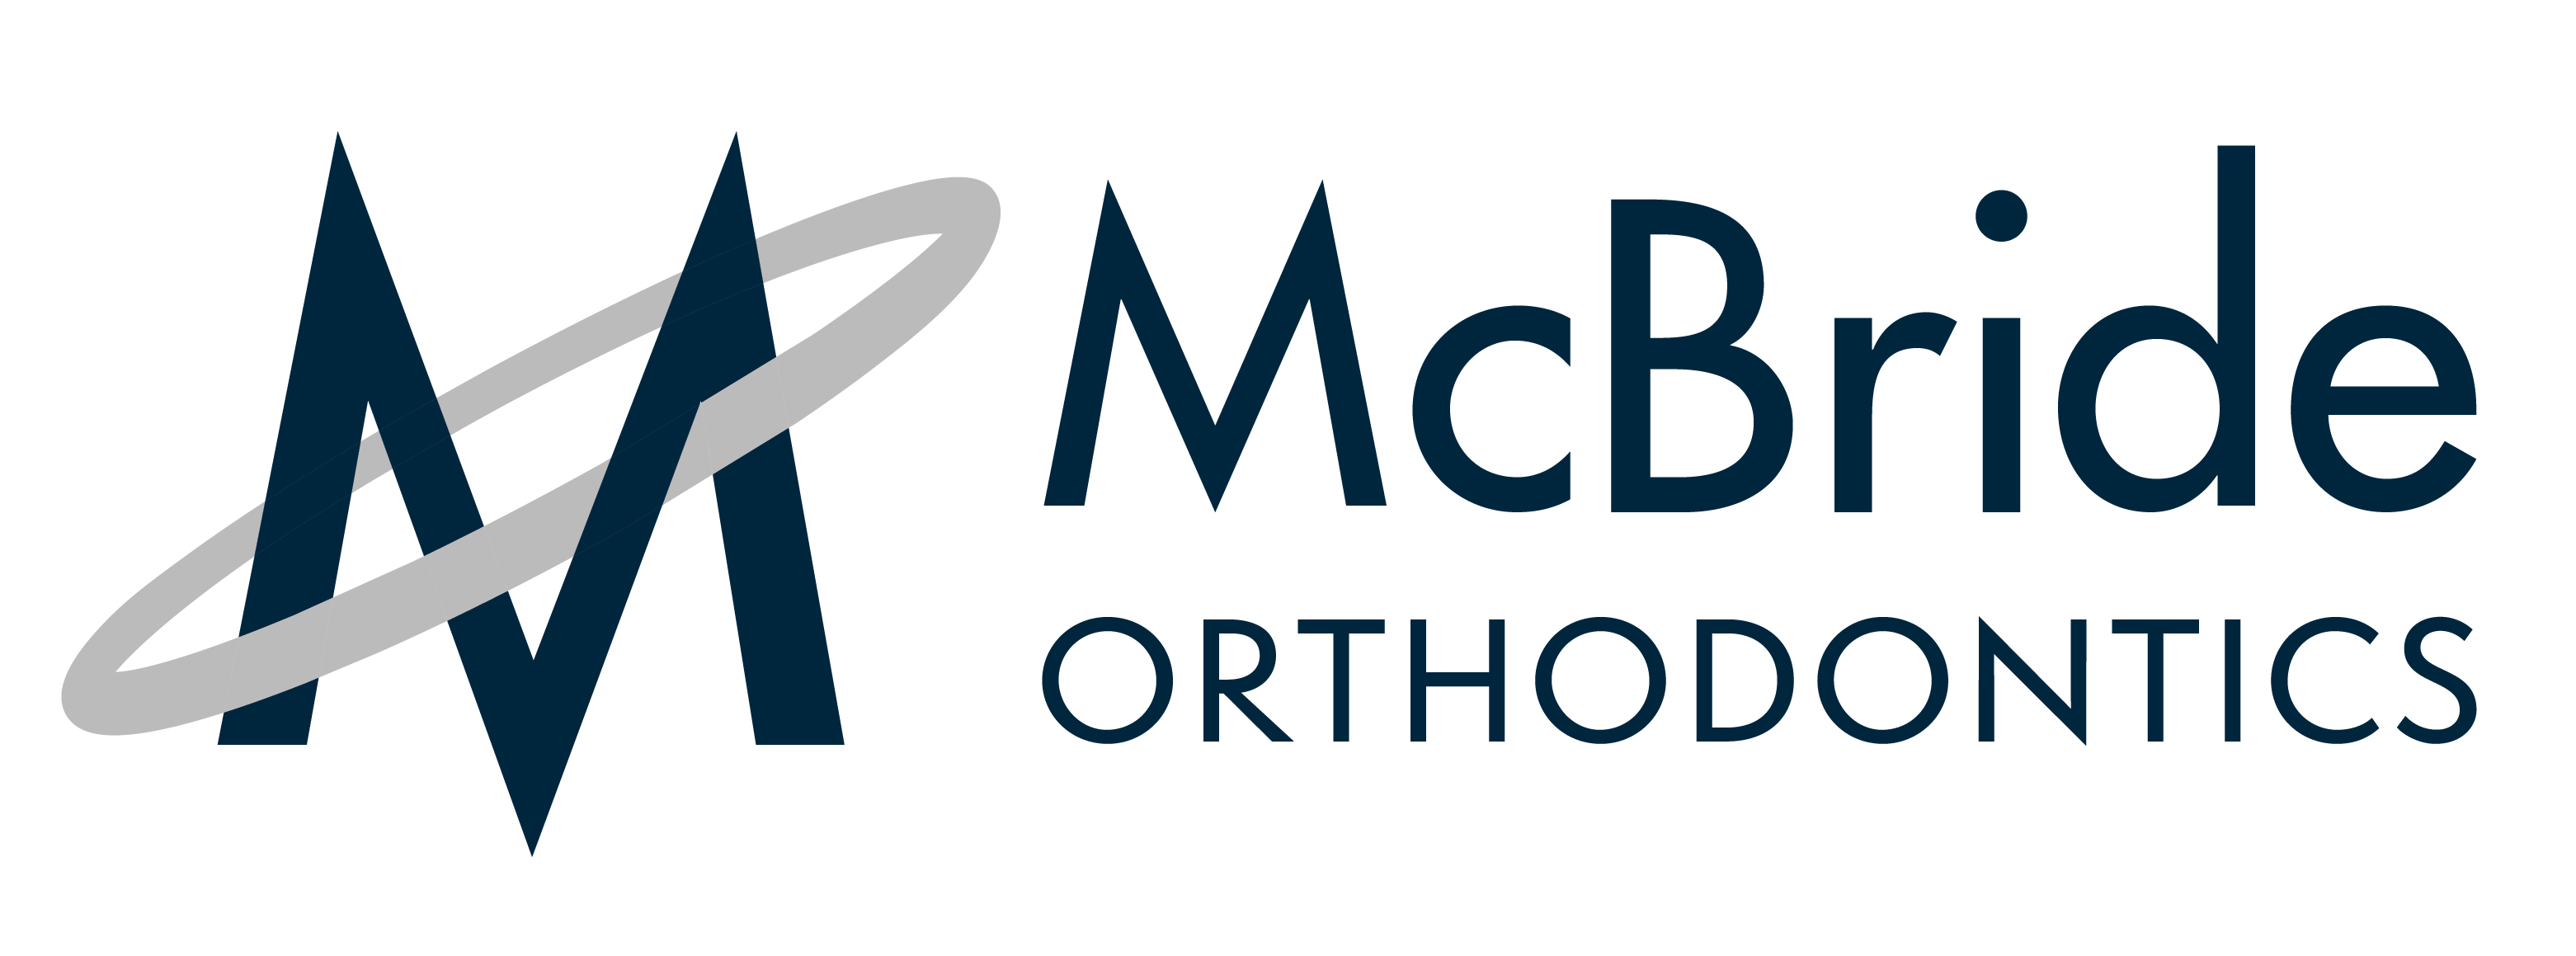 McBride Orthodontics - Matthew McBride, DDS, MS